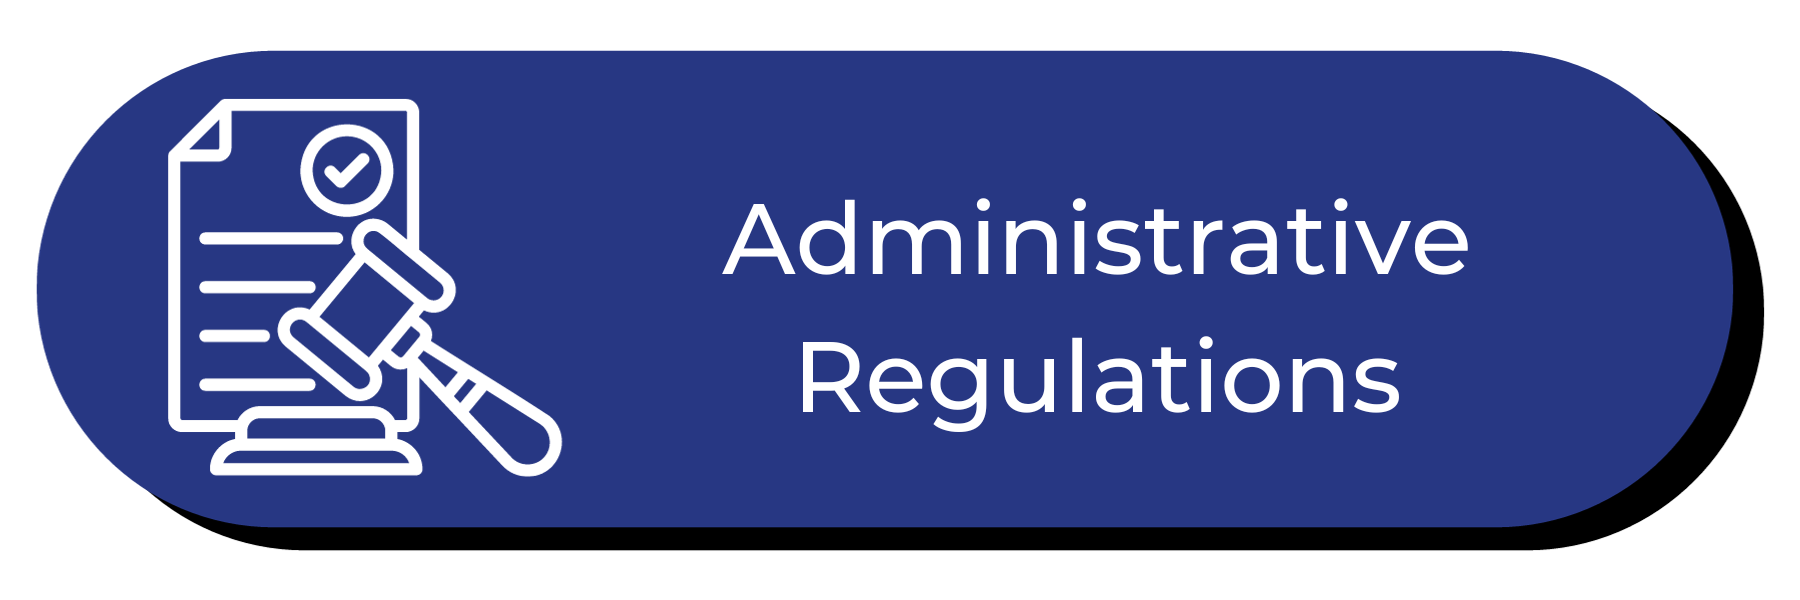 Administrative Regulation Button